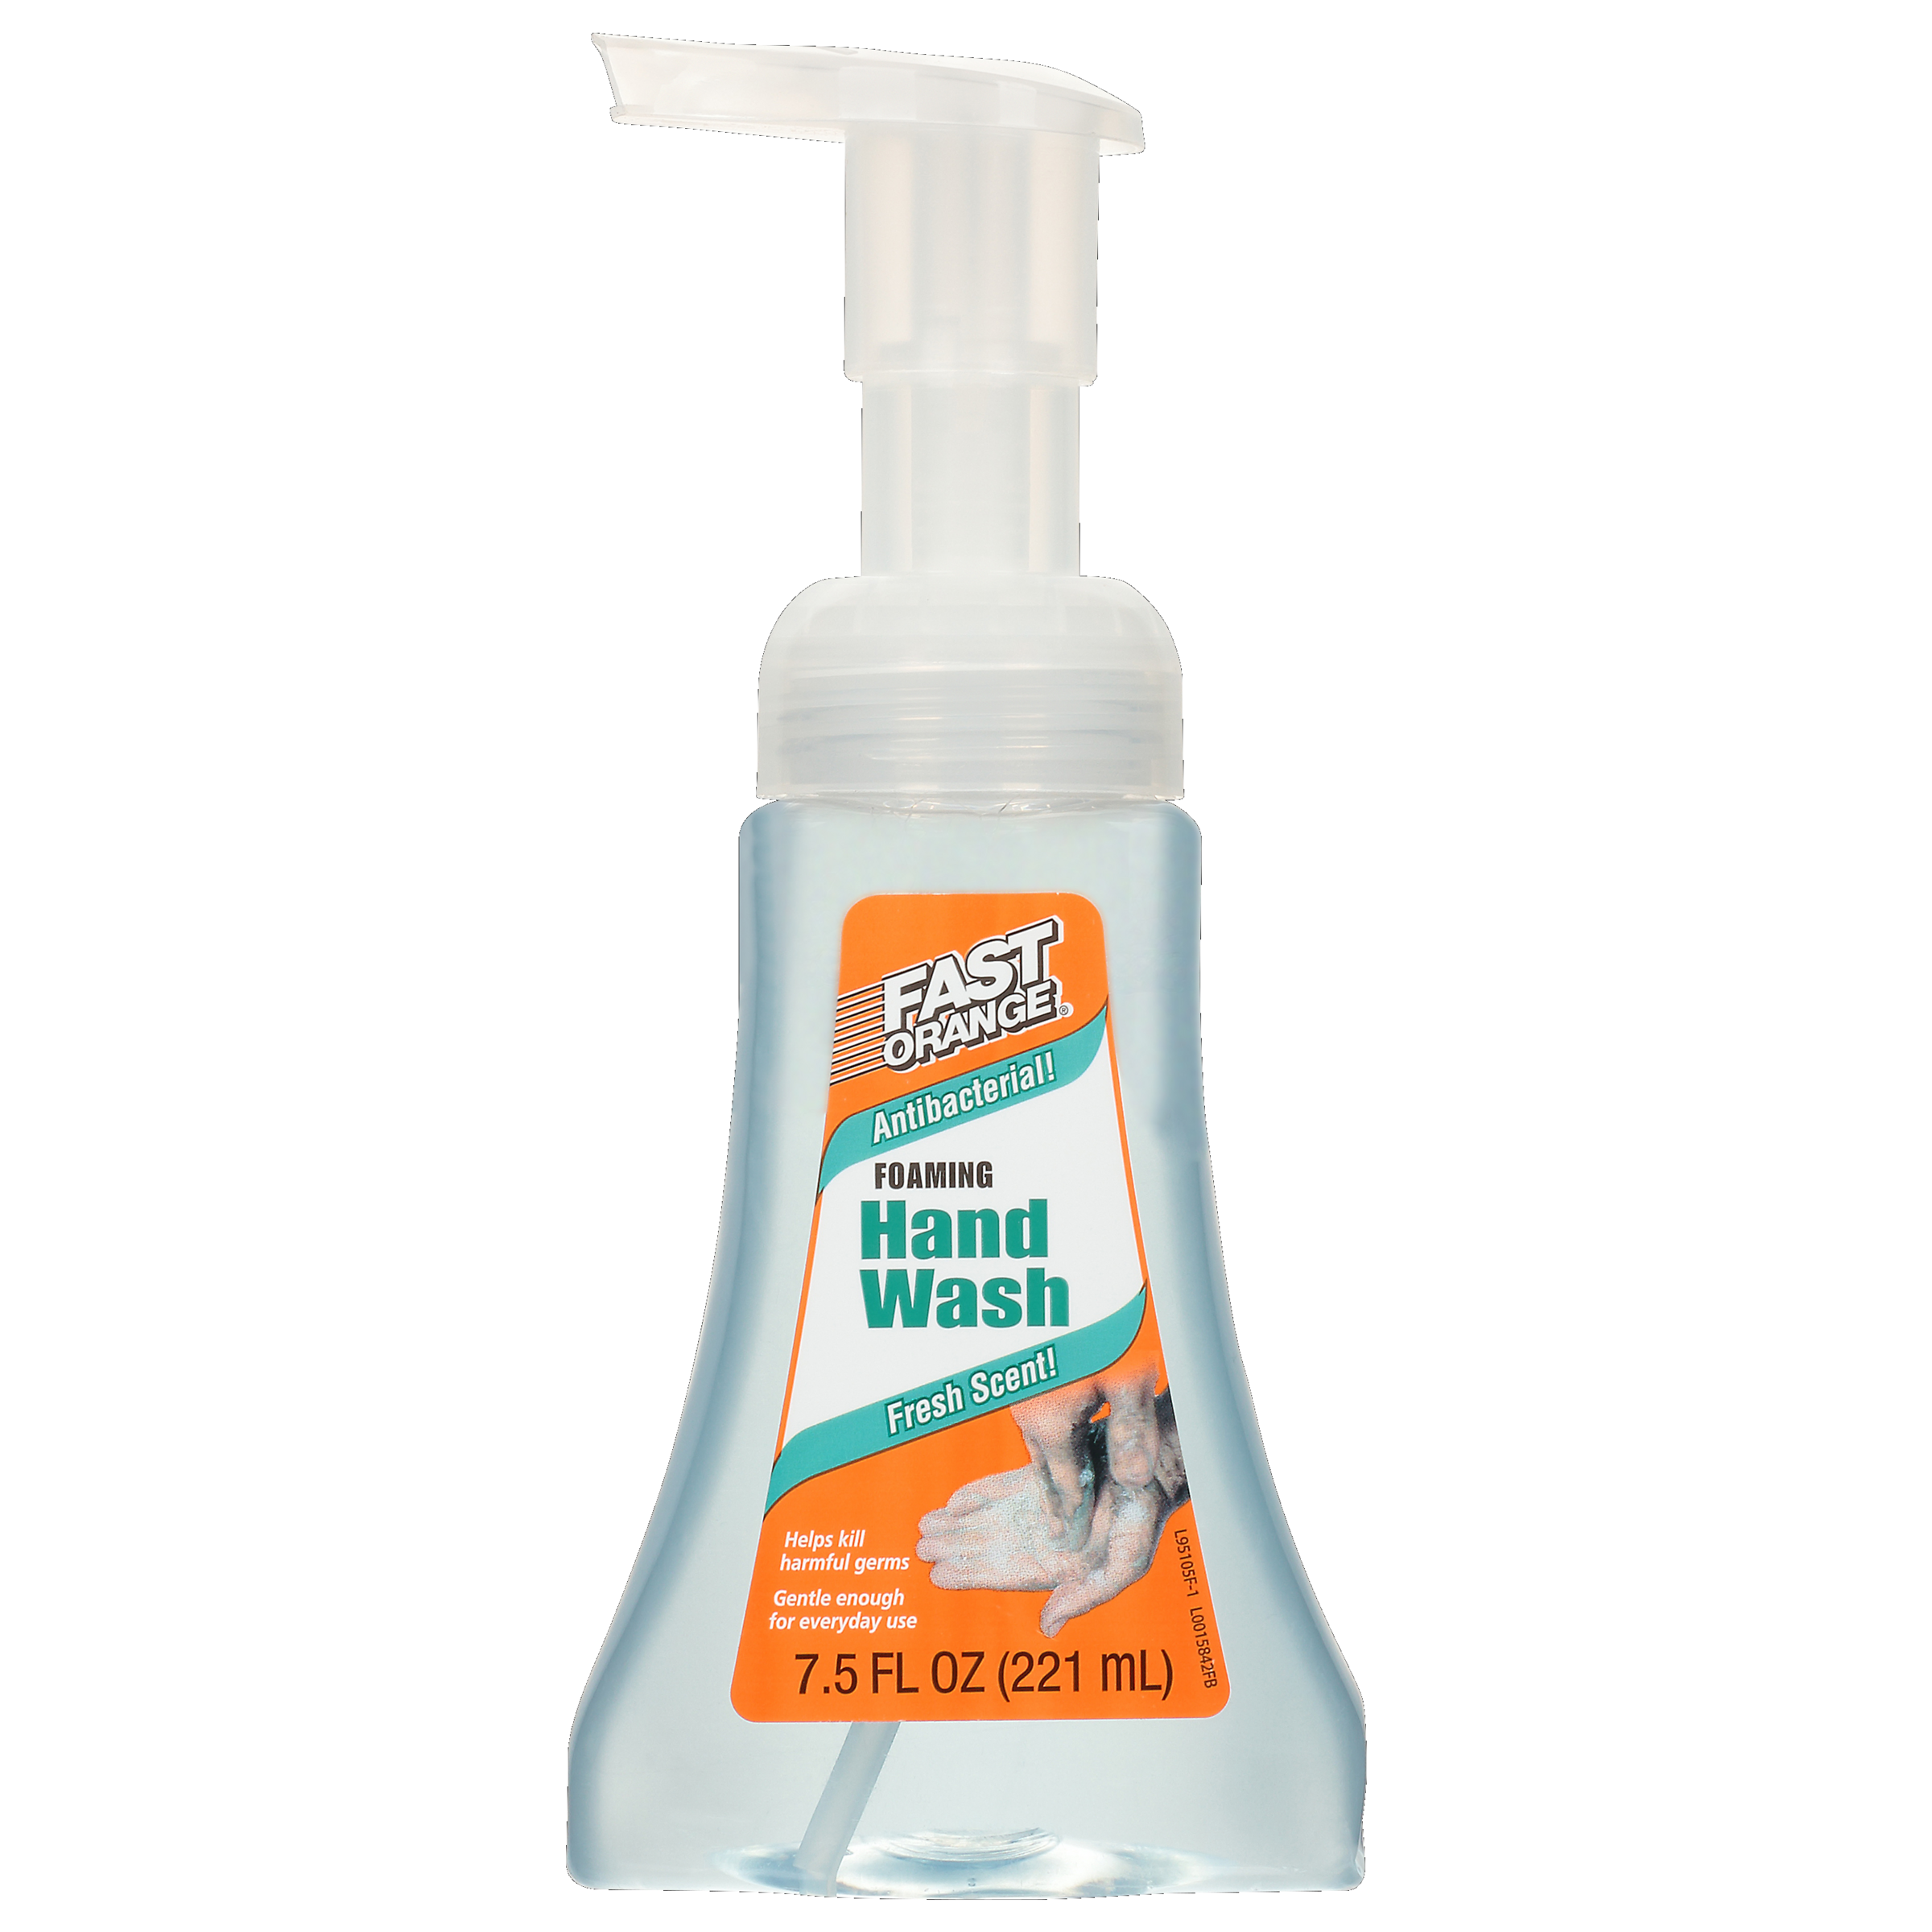 Fast Orange<span class="sup">®</span> Anti-bacterial Foaming Hand Wash, 7.5 FL OZ